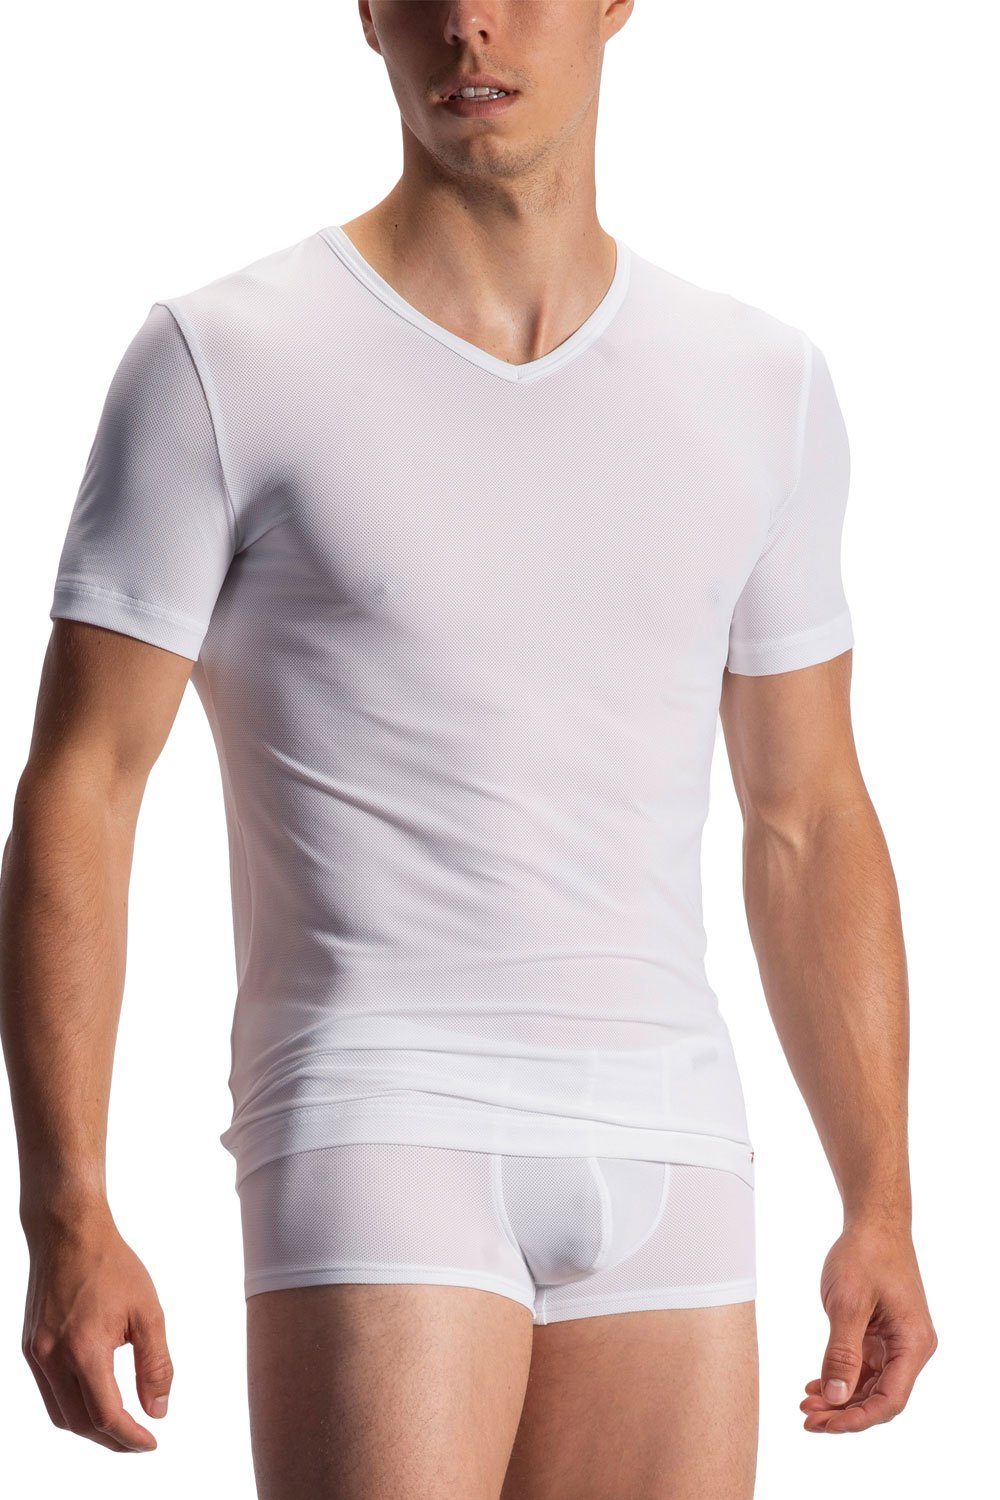 Olaf Benz T-Shirt Shirt V-Neck (Reg) 108404 white | T-Shirts